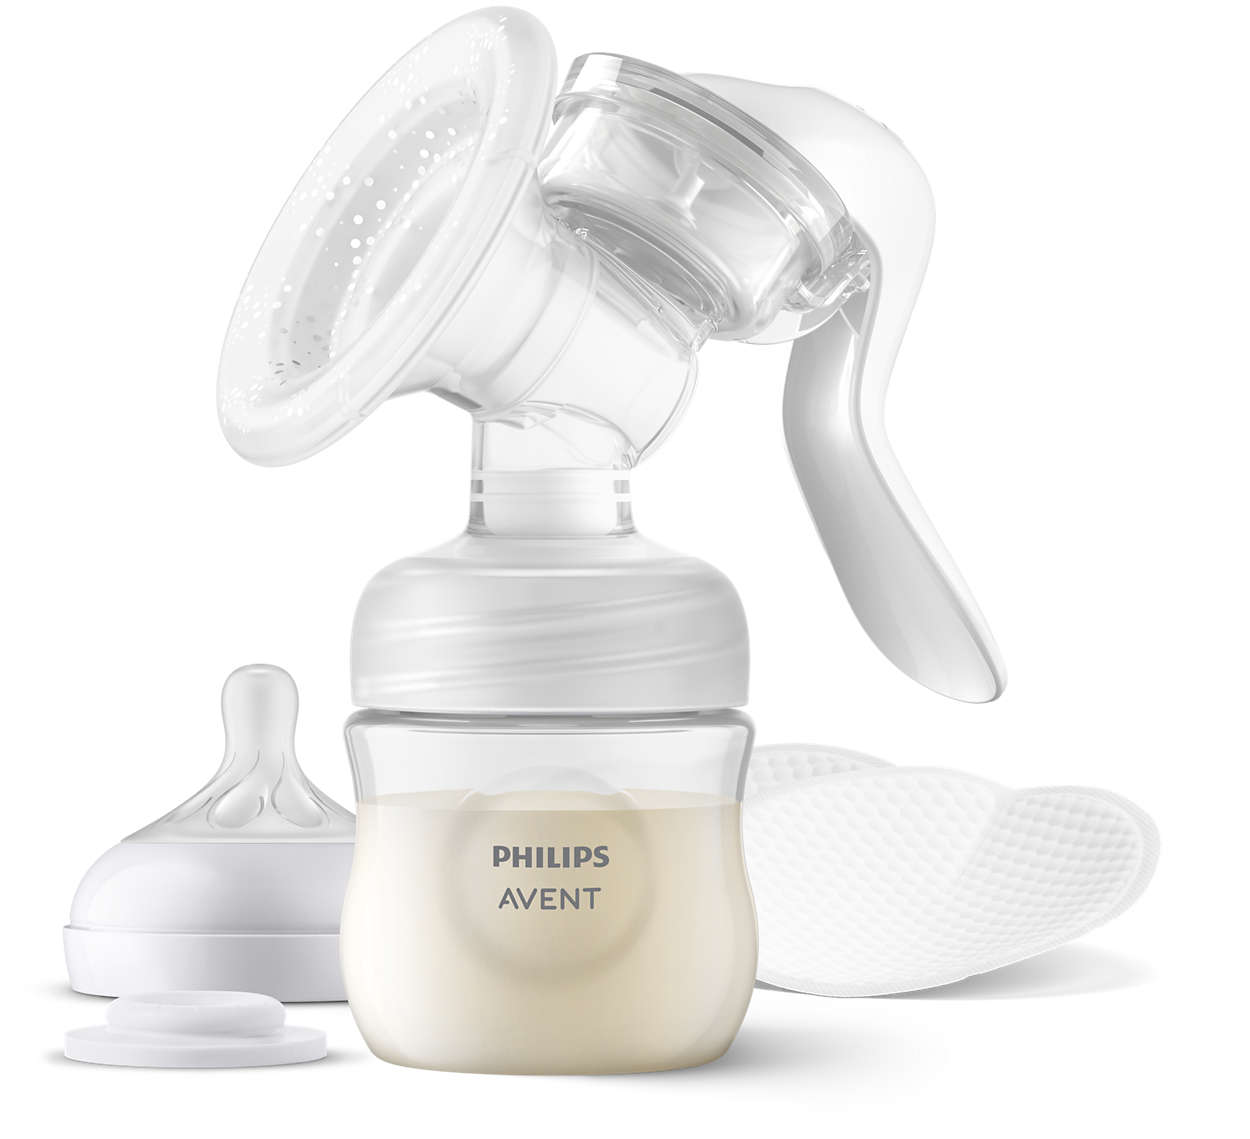 Flange Kit For Philips Avent Comfort Breastpump 